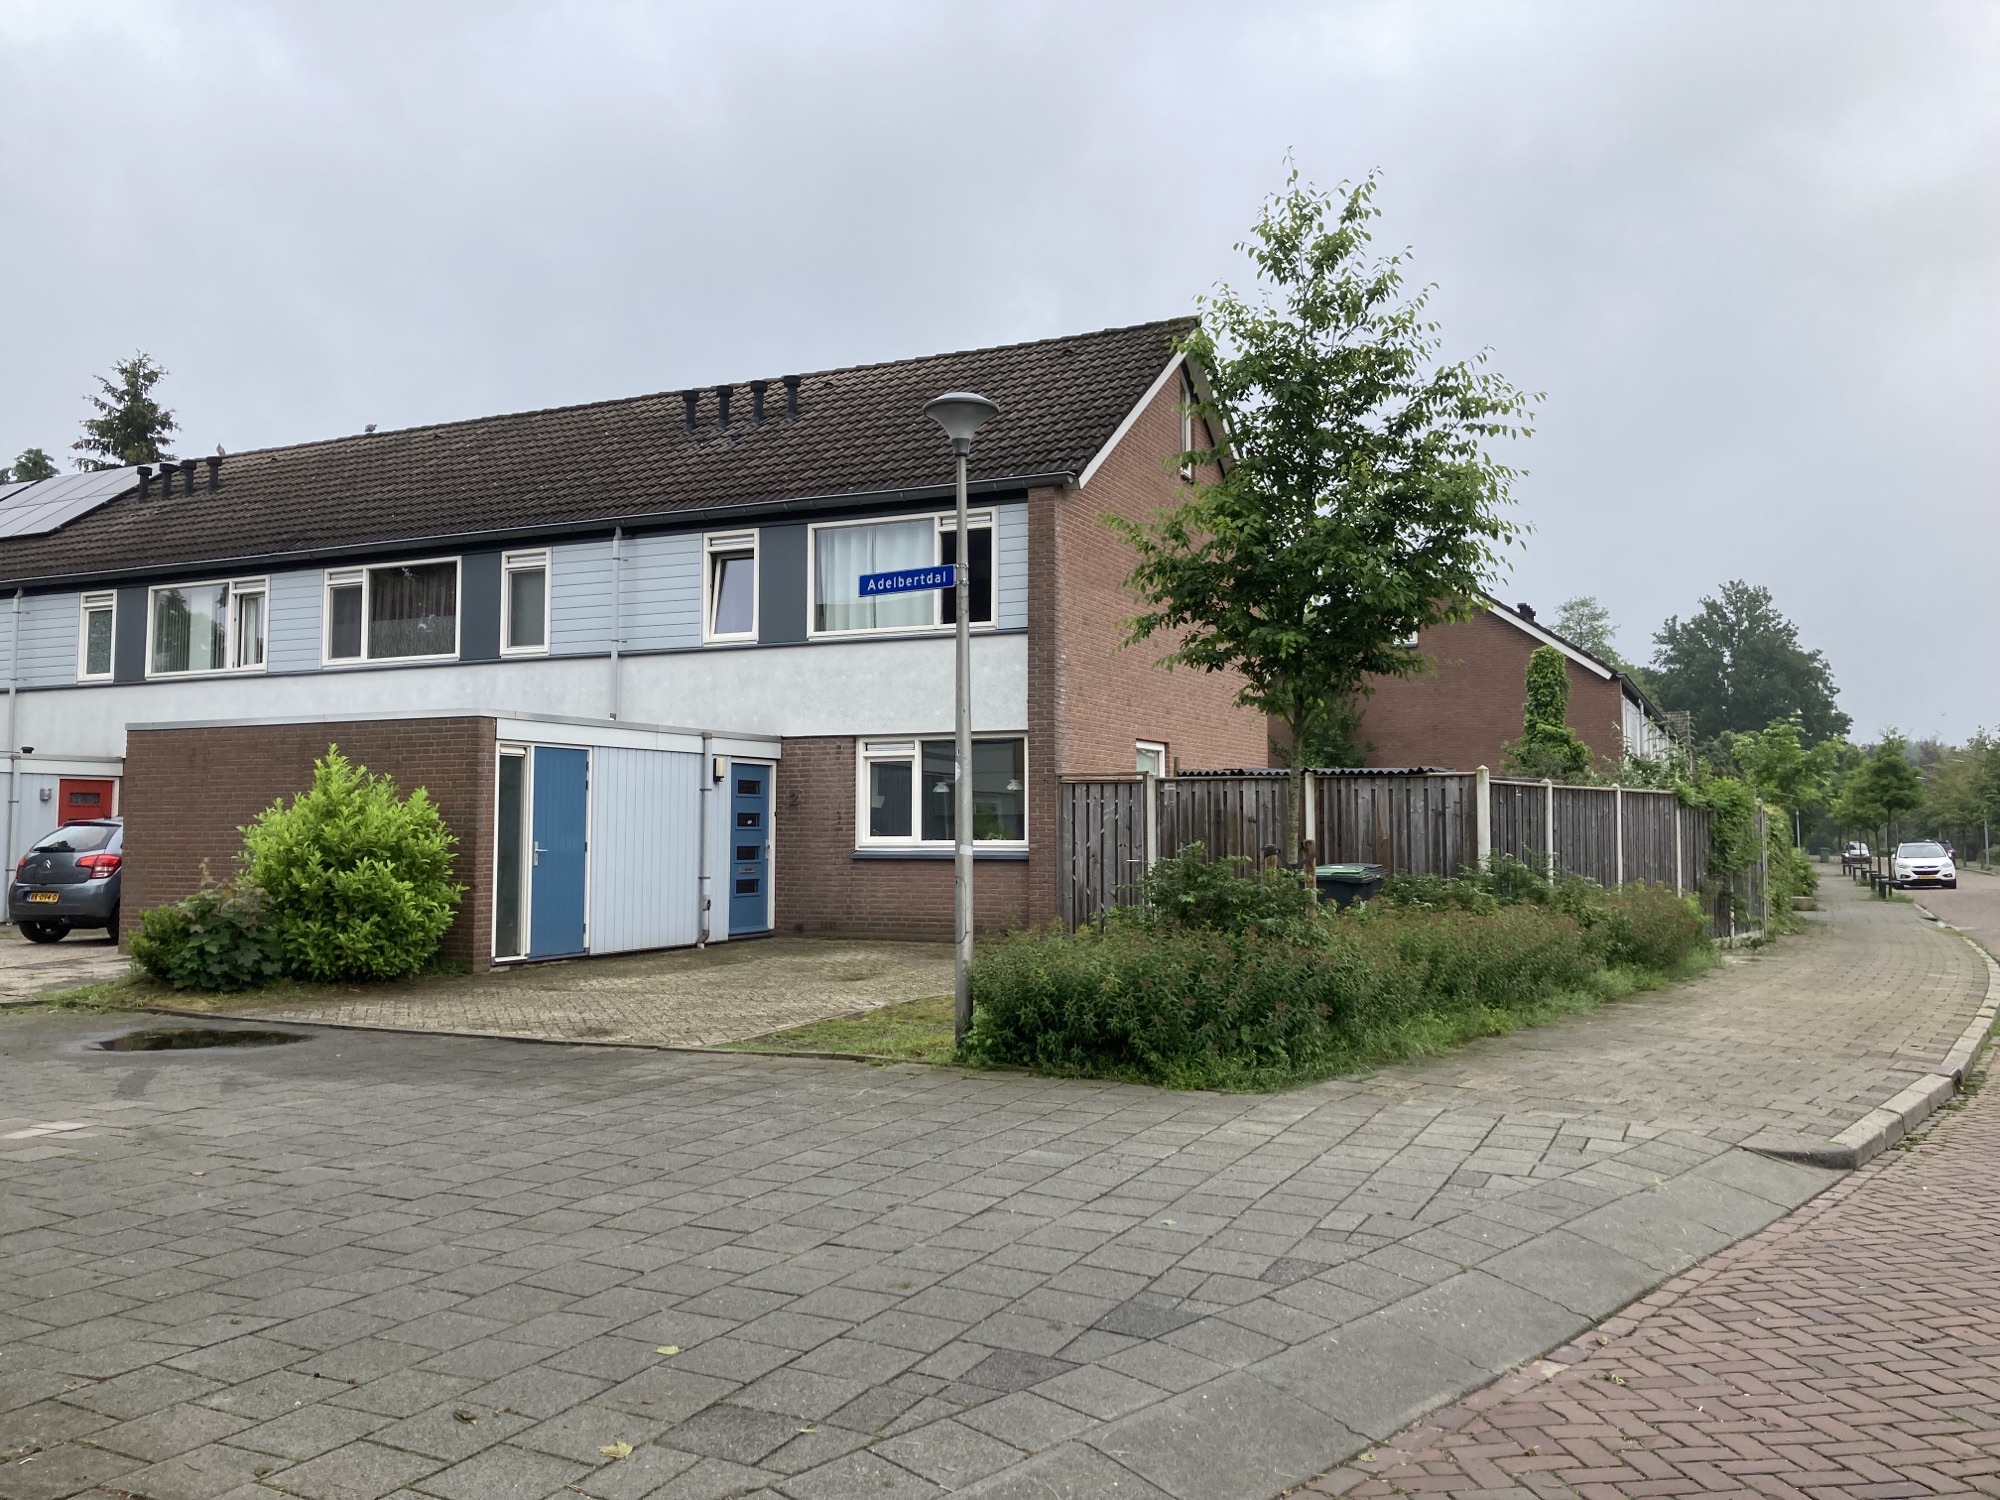 Adelbertdal 2, 5551 CL Valkenswaard, Nederland